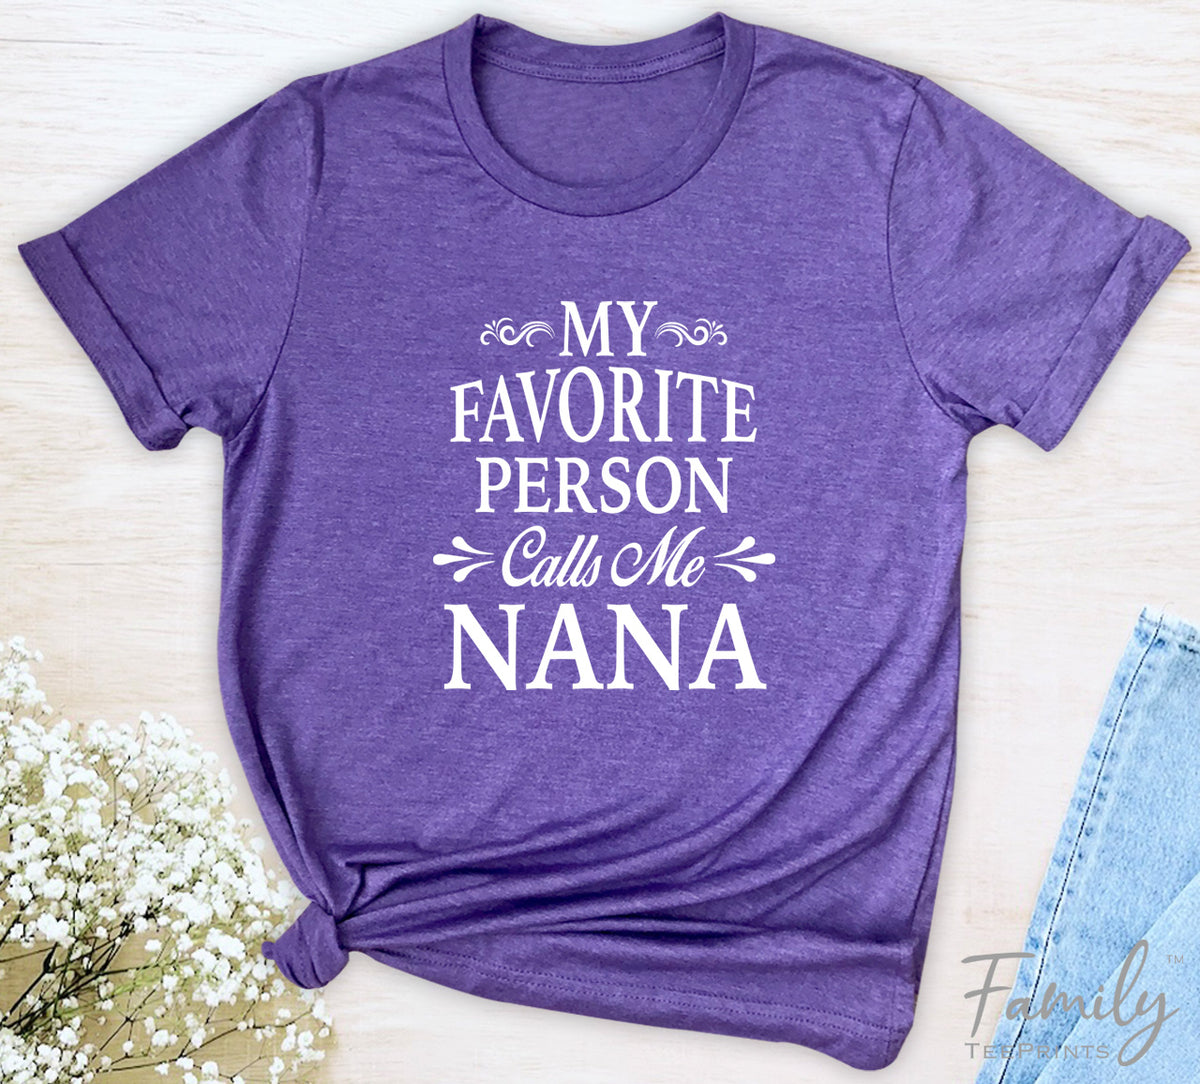 My Favorite Person Calls Me Nana - Unisex T-shirt - Nana Shirt - Gift For Nana